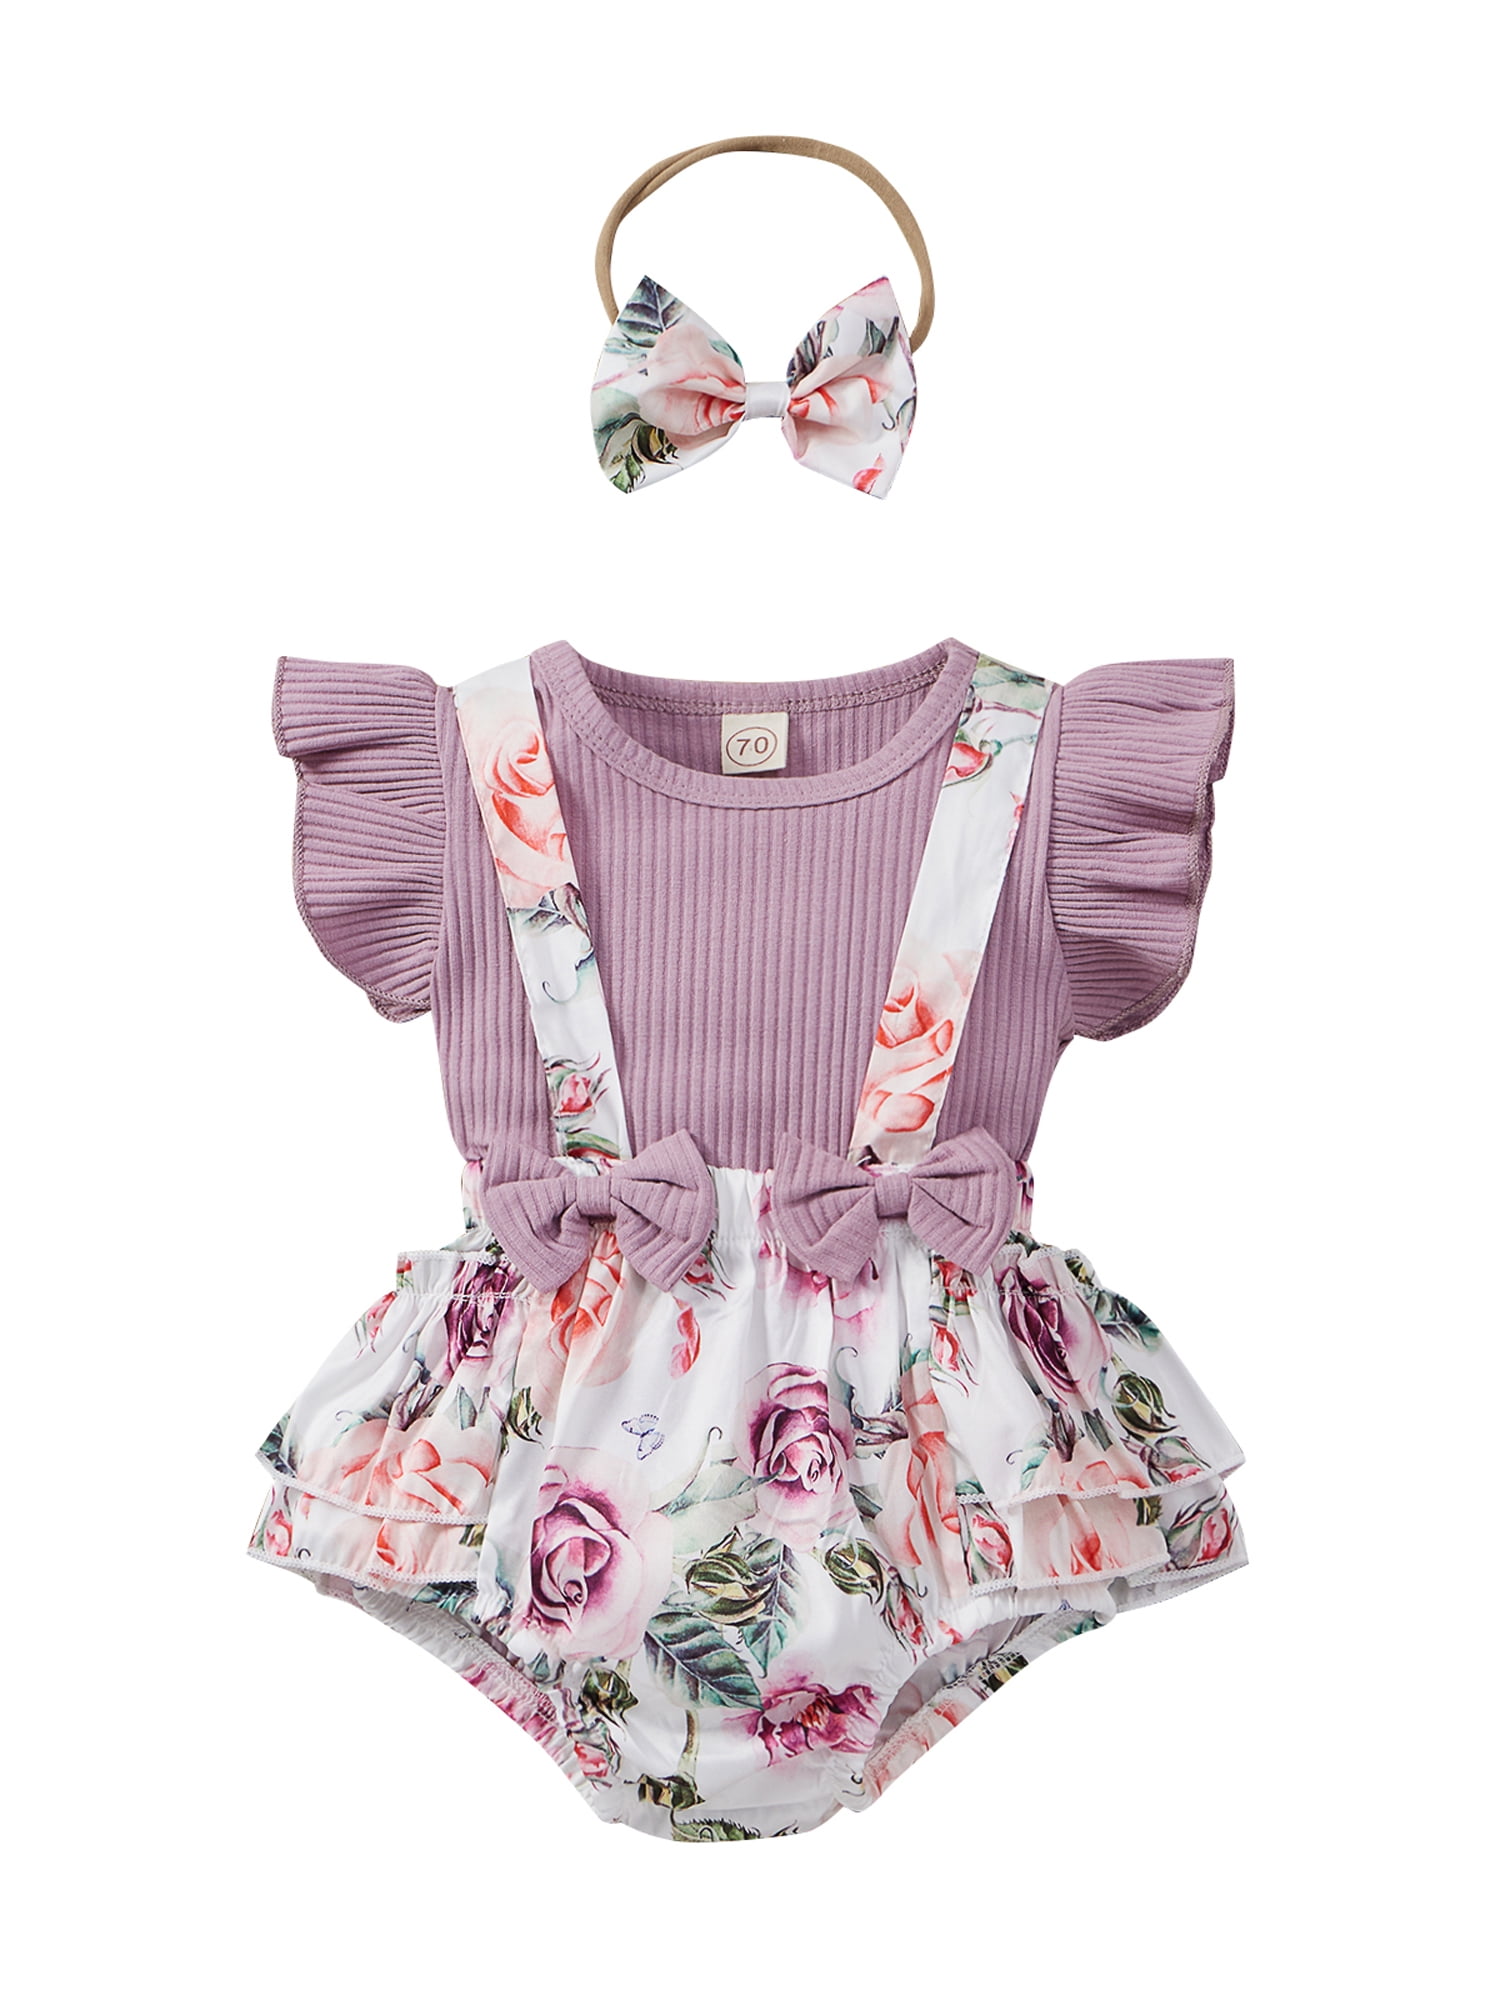 Baby Toddler Girls 3pcs Summer Outfit Set Princess Short Sleeve Romper+Suspender Flosers Dress+Bowknot Headband 